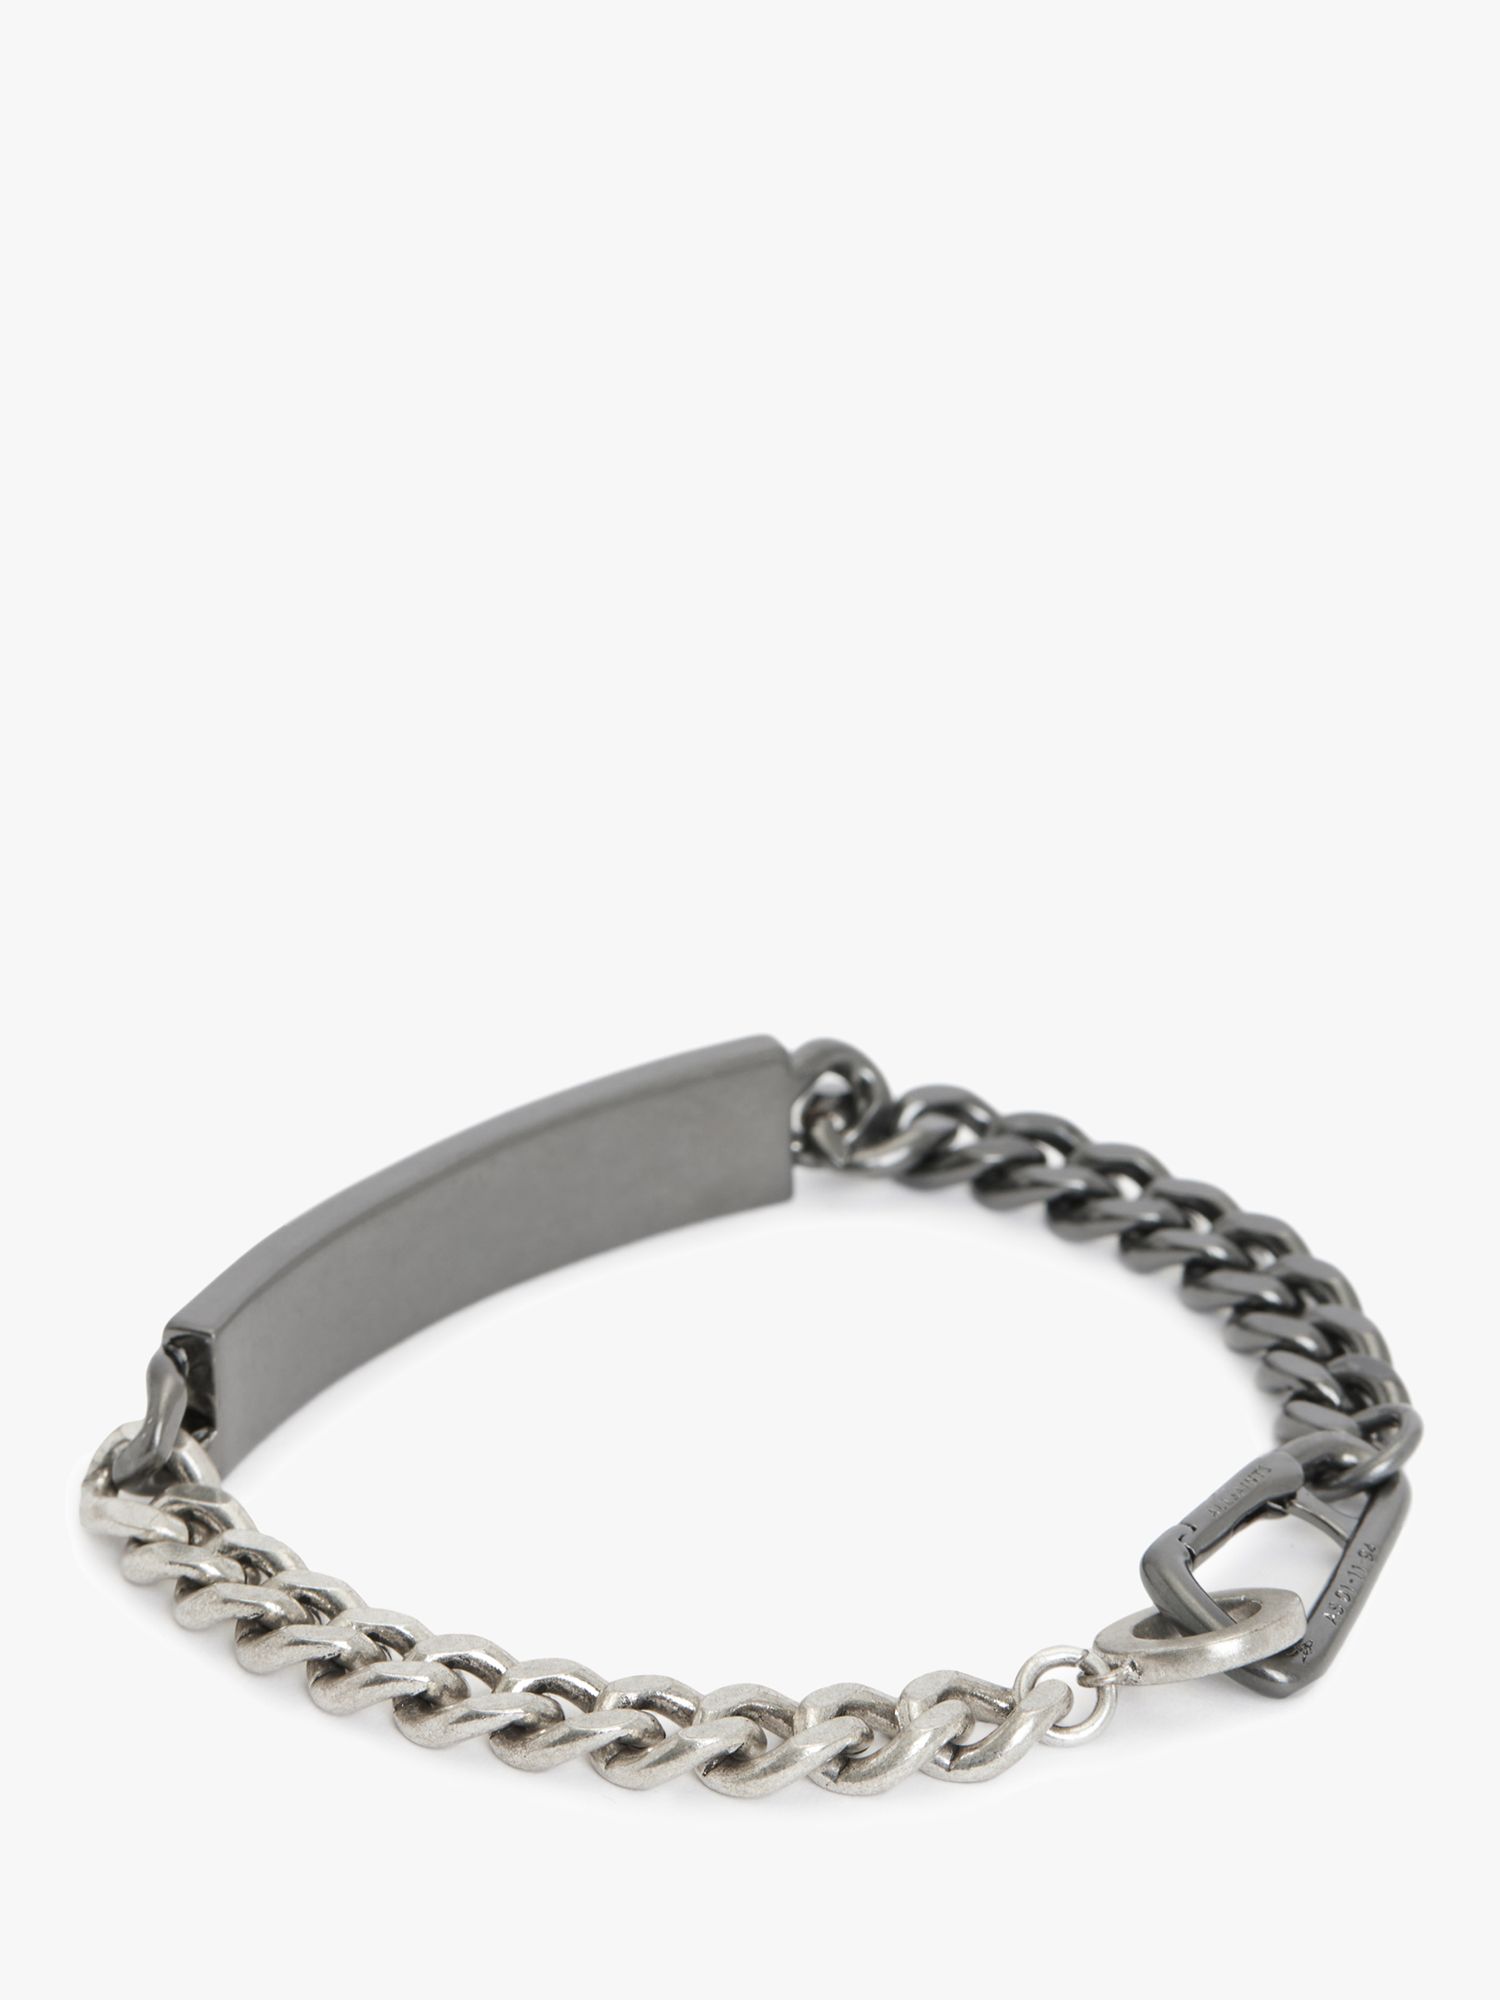 Buy AllSaints Curb Chain ID Bracelet, Warm Silver/Dark Hem Online at johnlewis.com